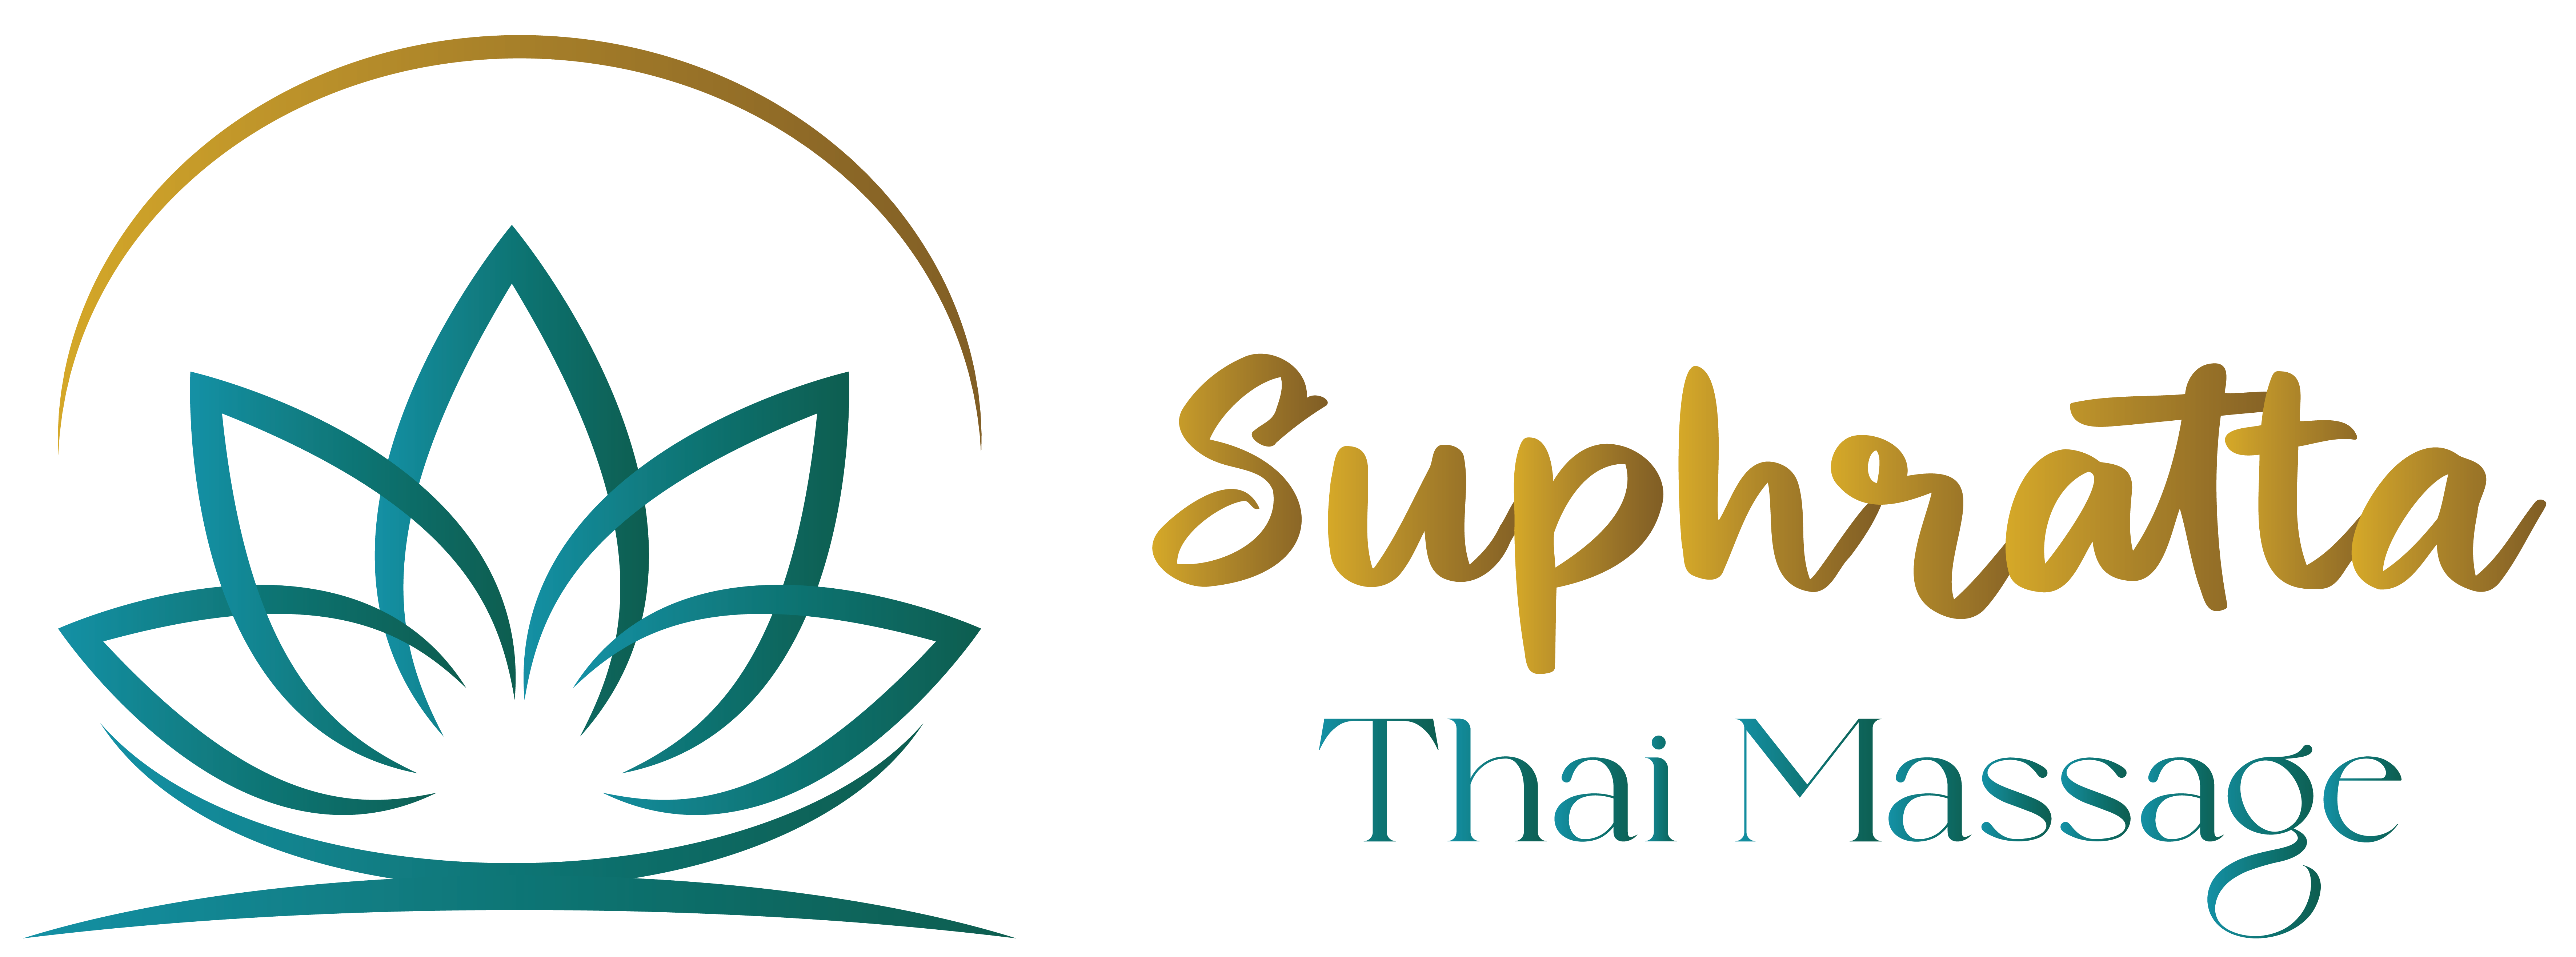 Suphratta Thai Massage Logo